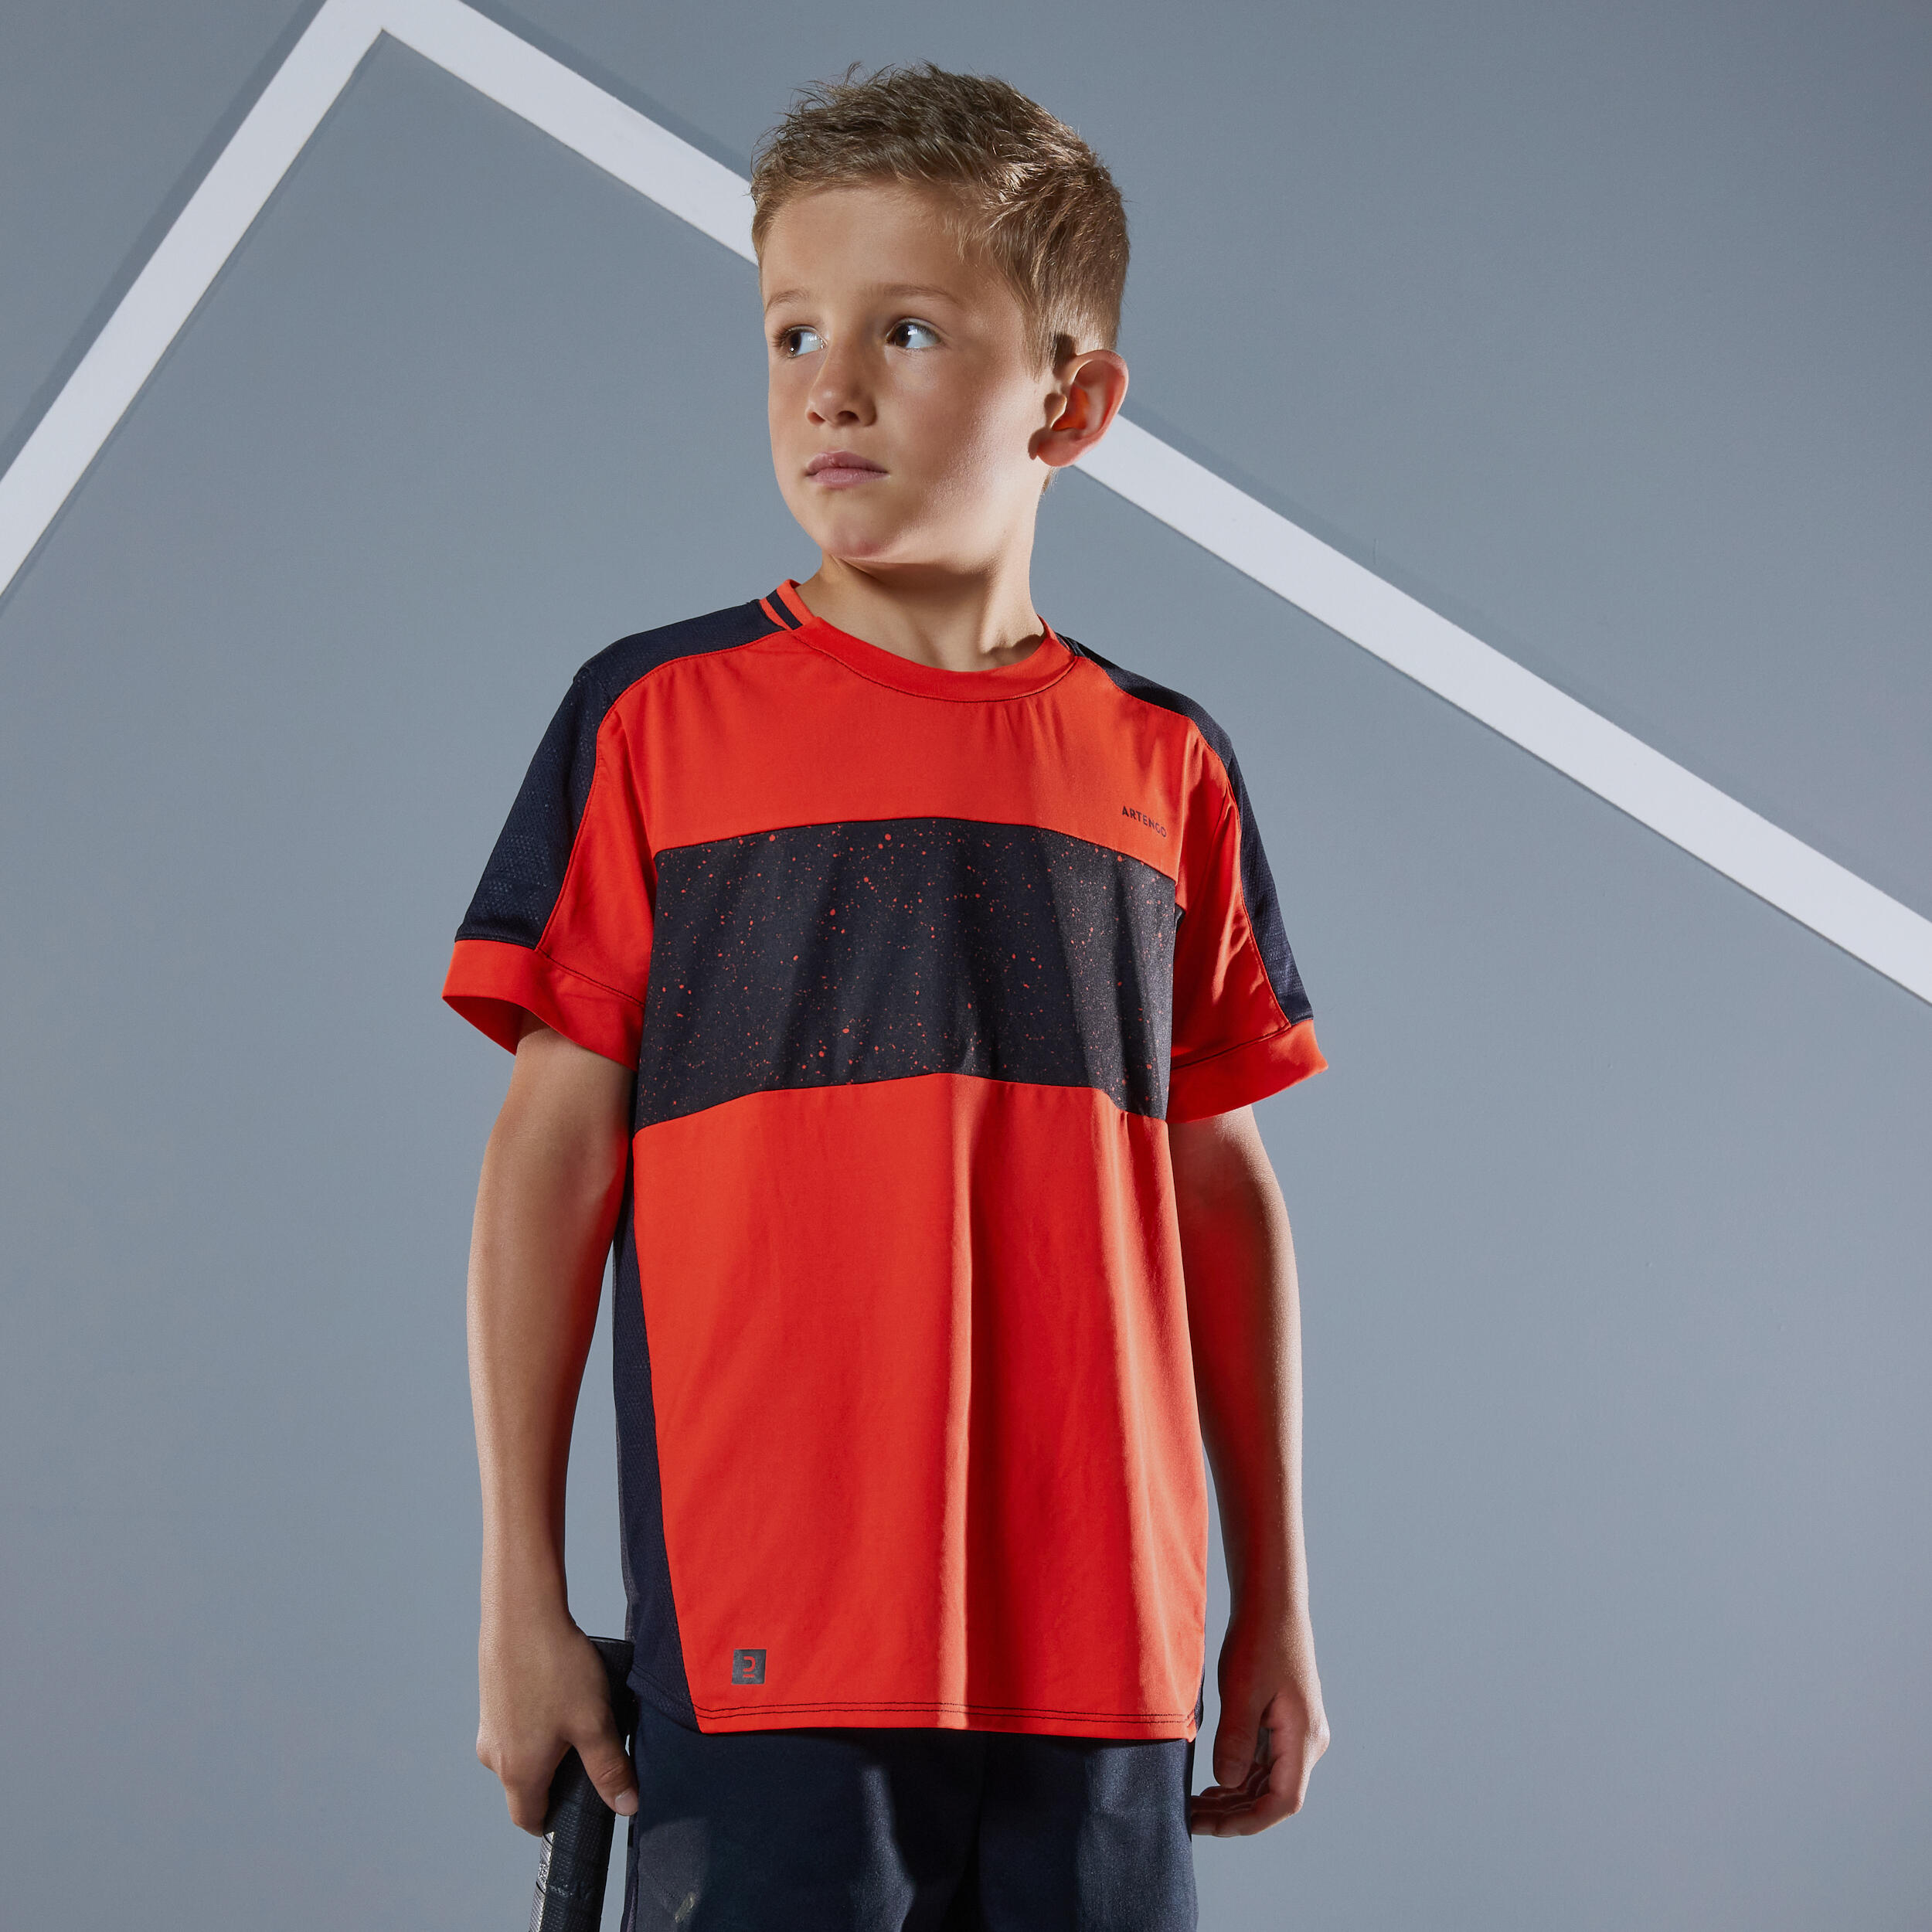 ARTENGO Boys' Tennis T-Shirt Dry 500 - Red